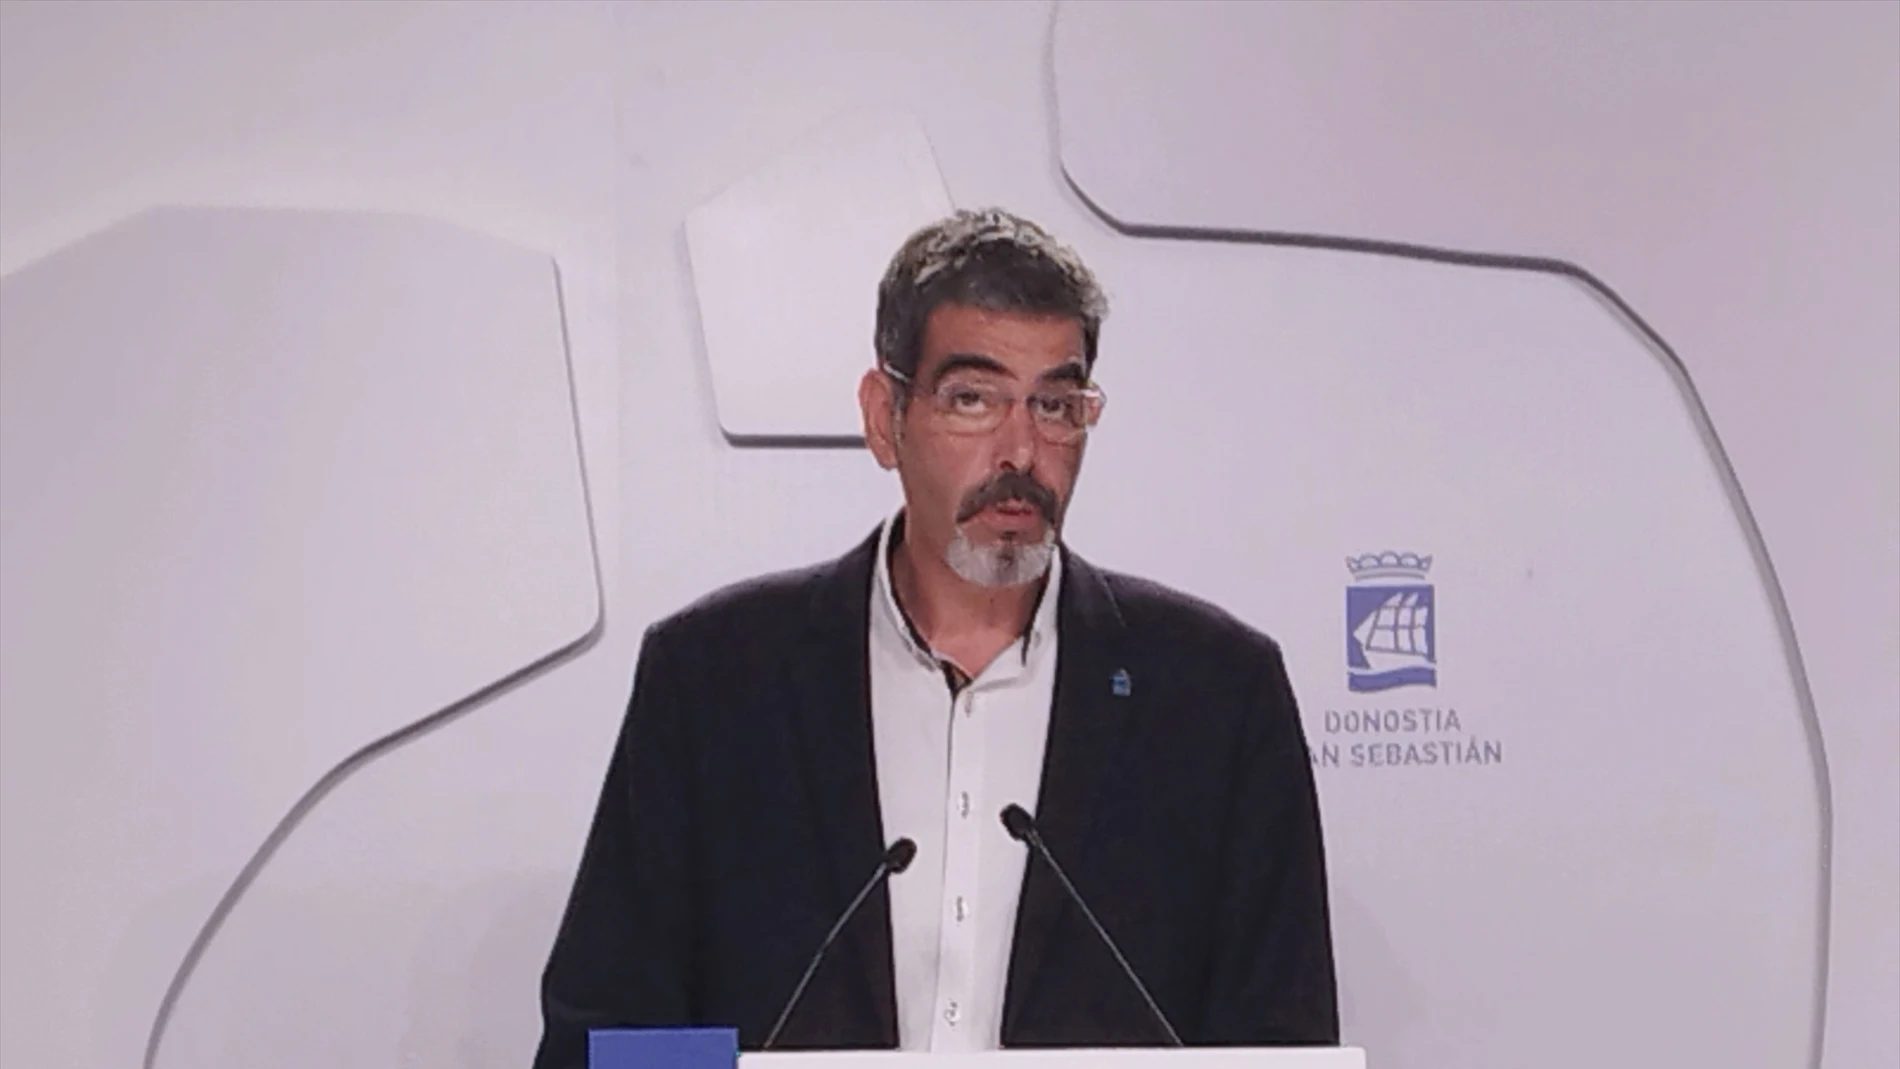 Eneko Goia, alcalde de San Sebastián por el PNV